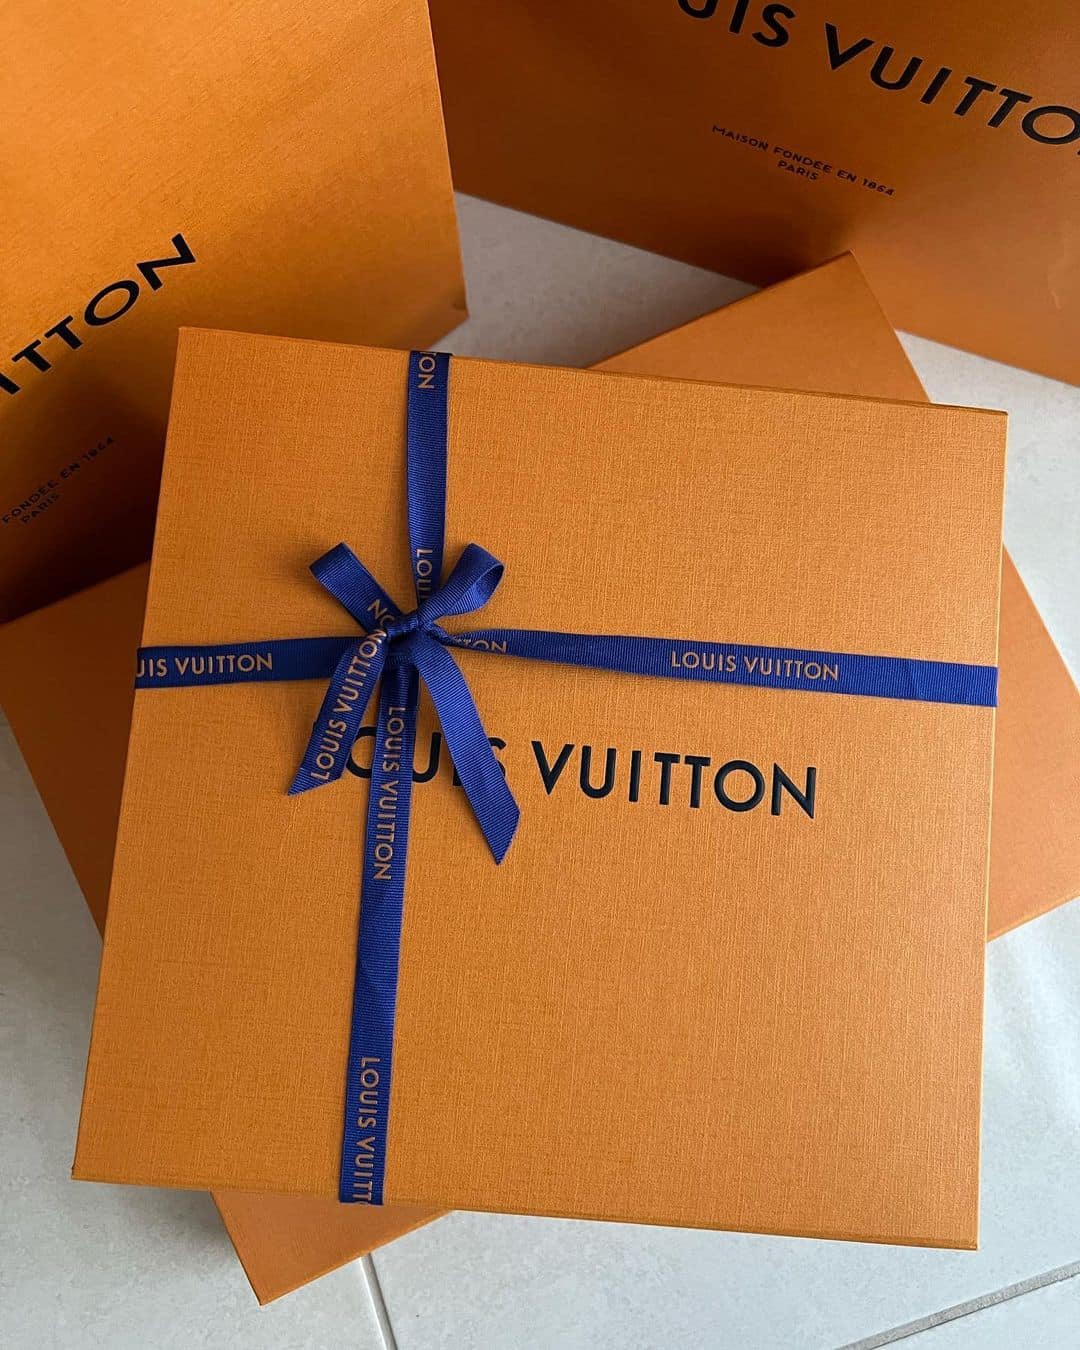 Louis vuitton gifts, Louis Vuitton Orange boxes